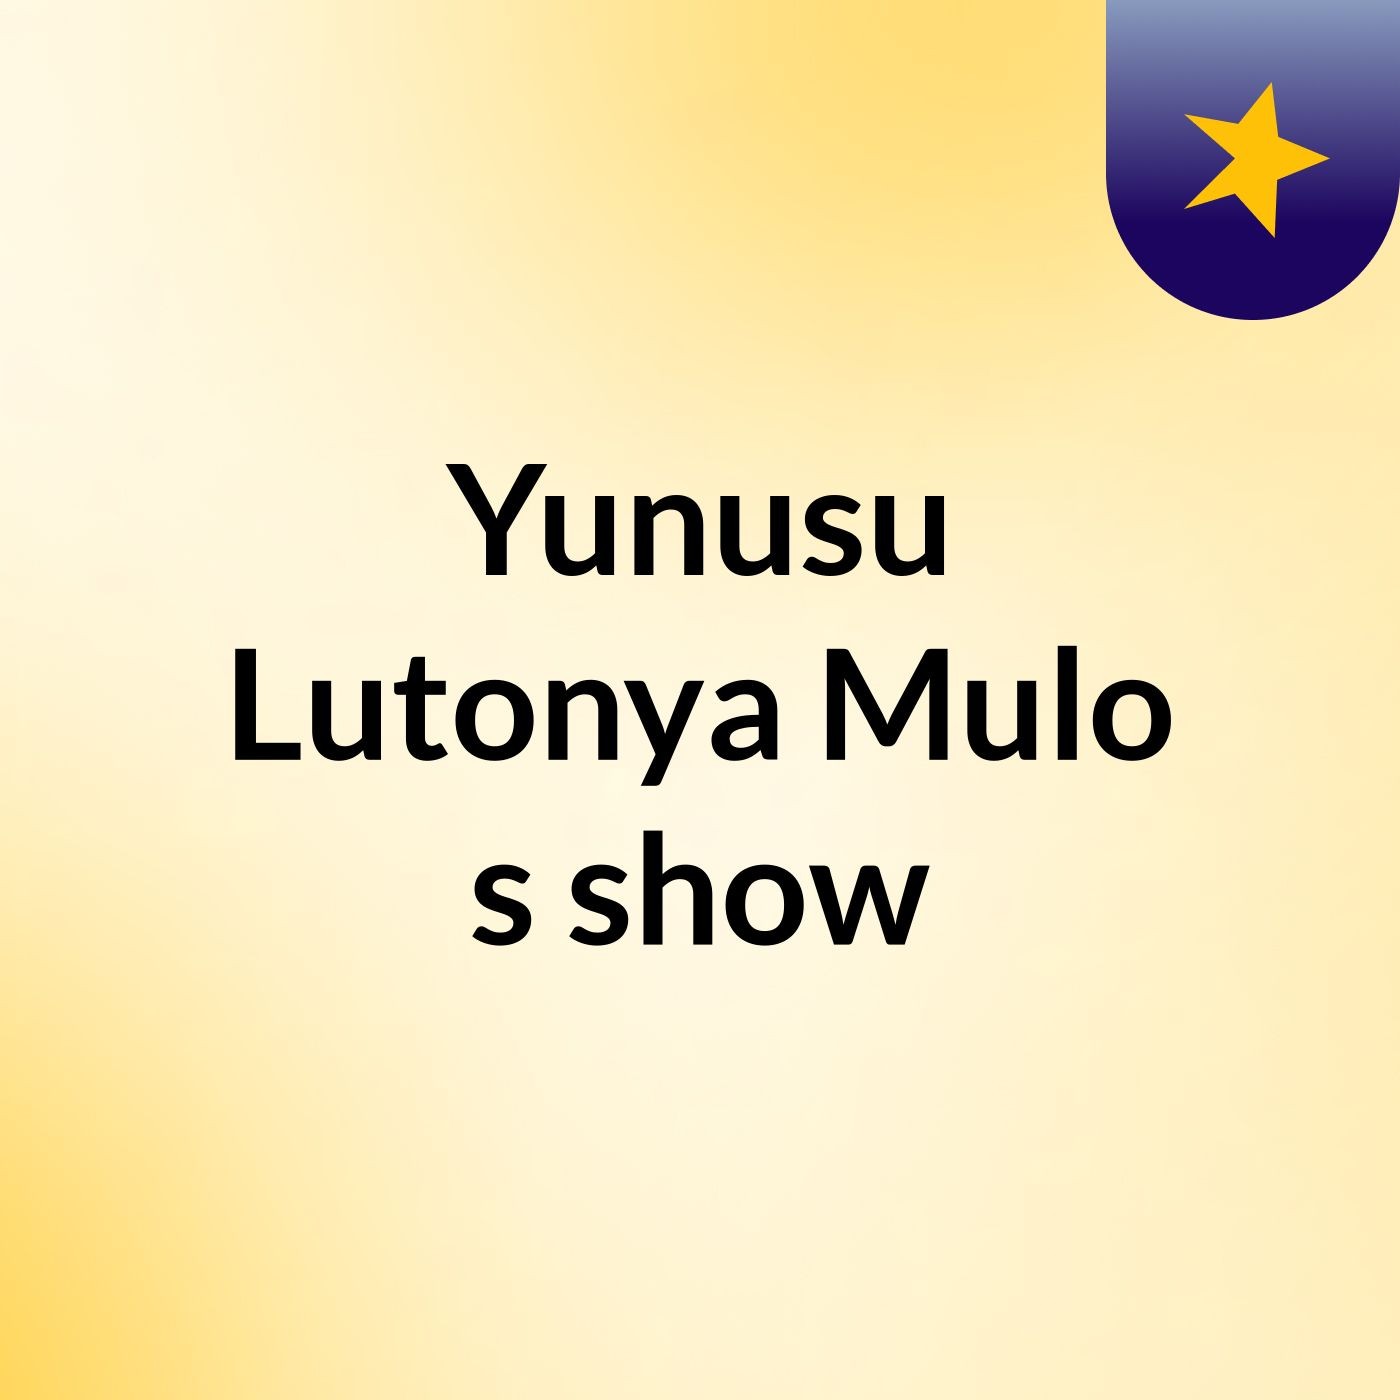 Yunusu Lutonya Mulo's show